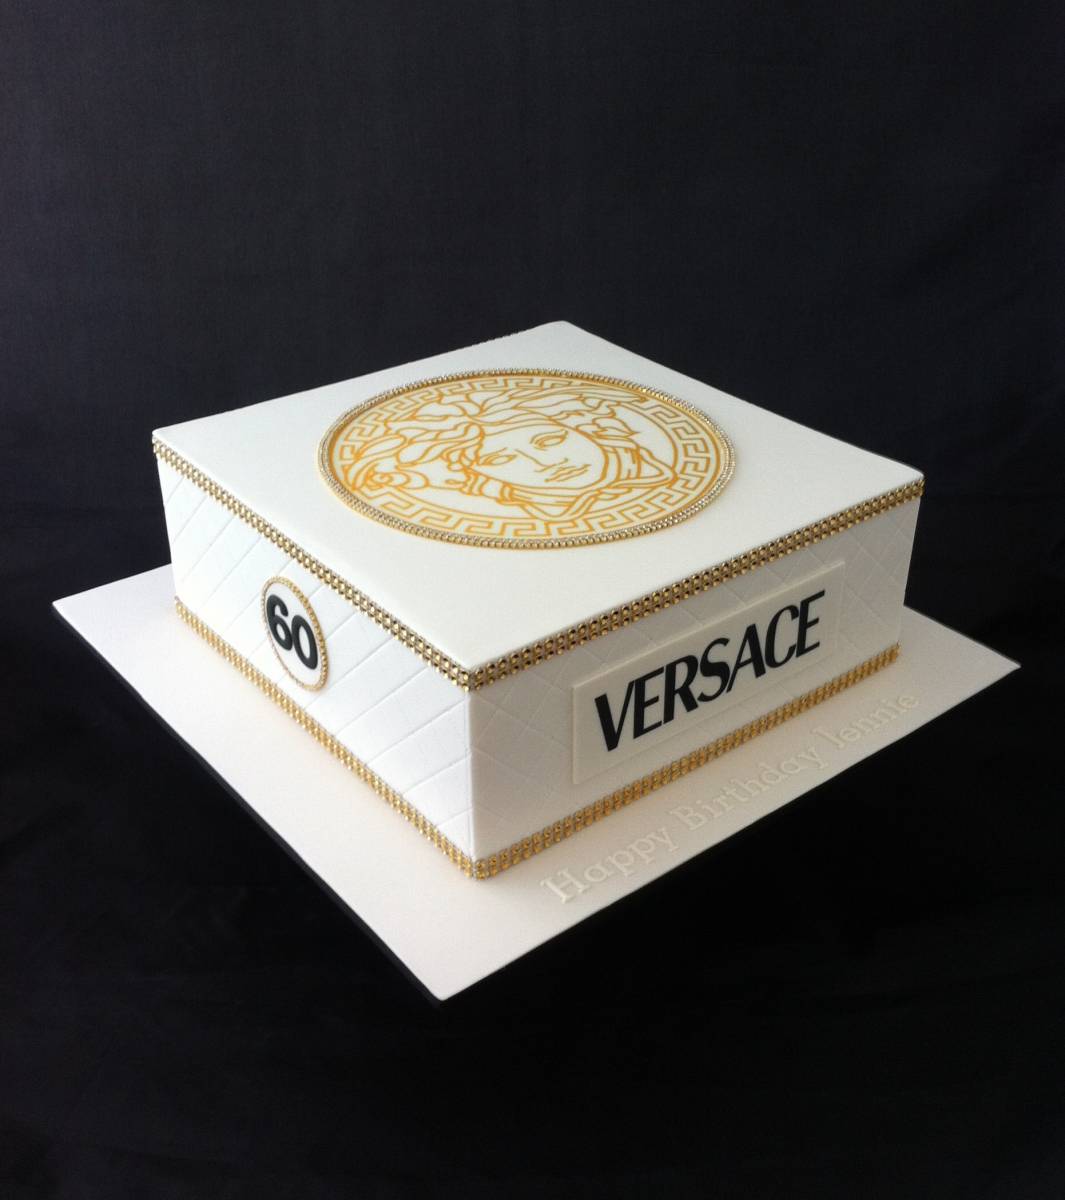 Versace cake - Picture of Sponge and Cream, London - Tripadvisor